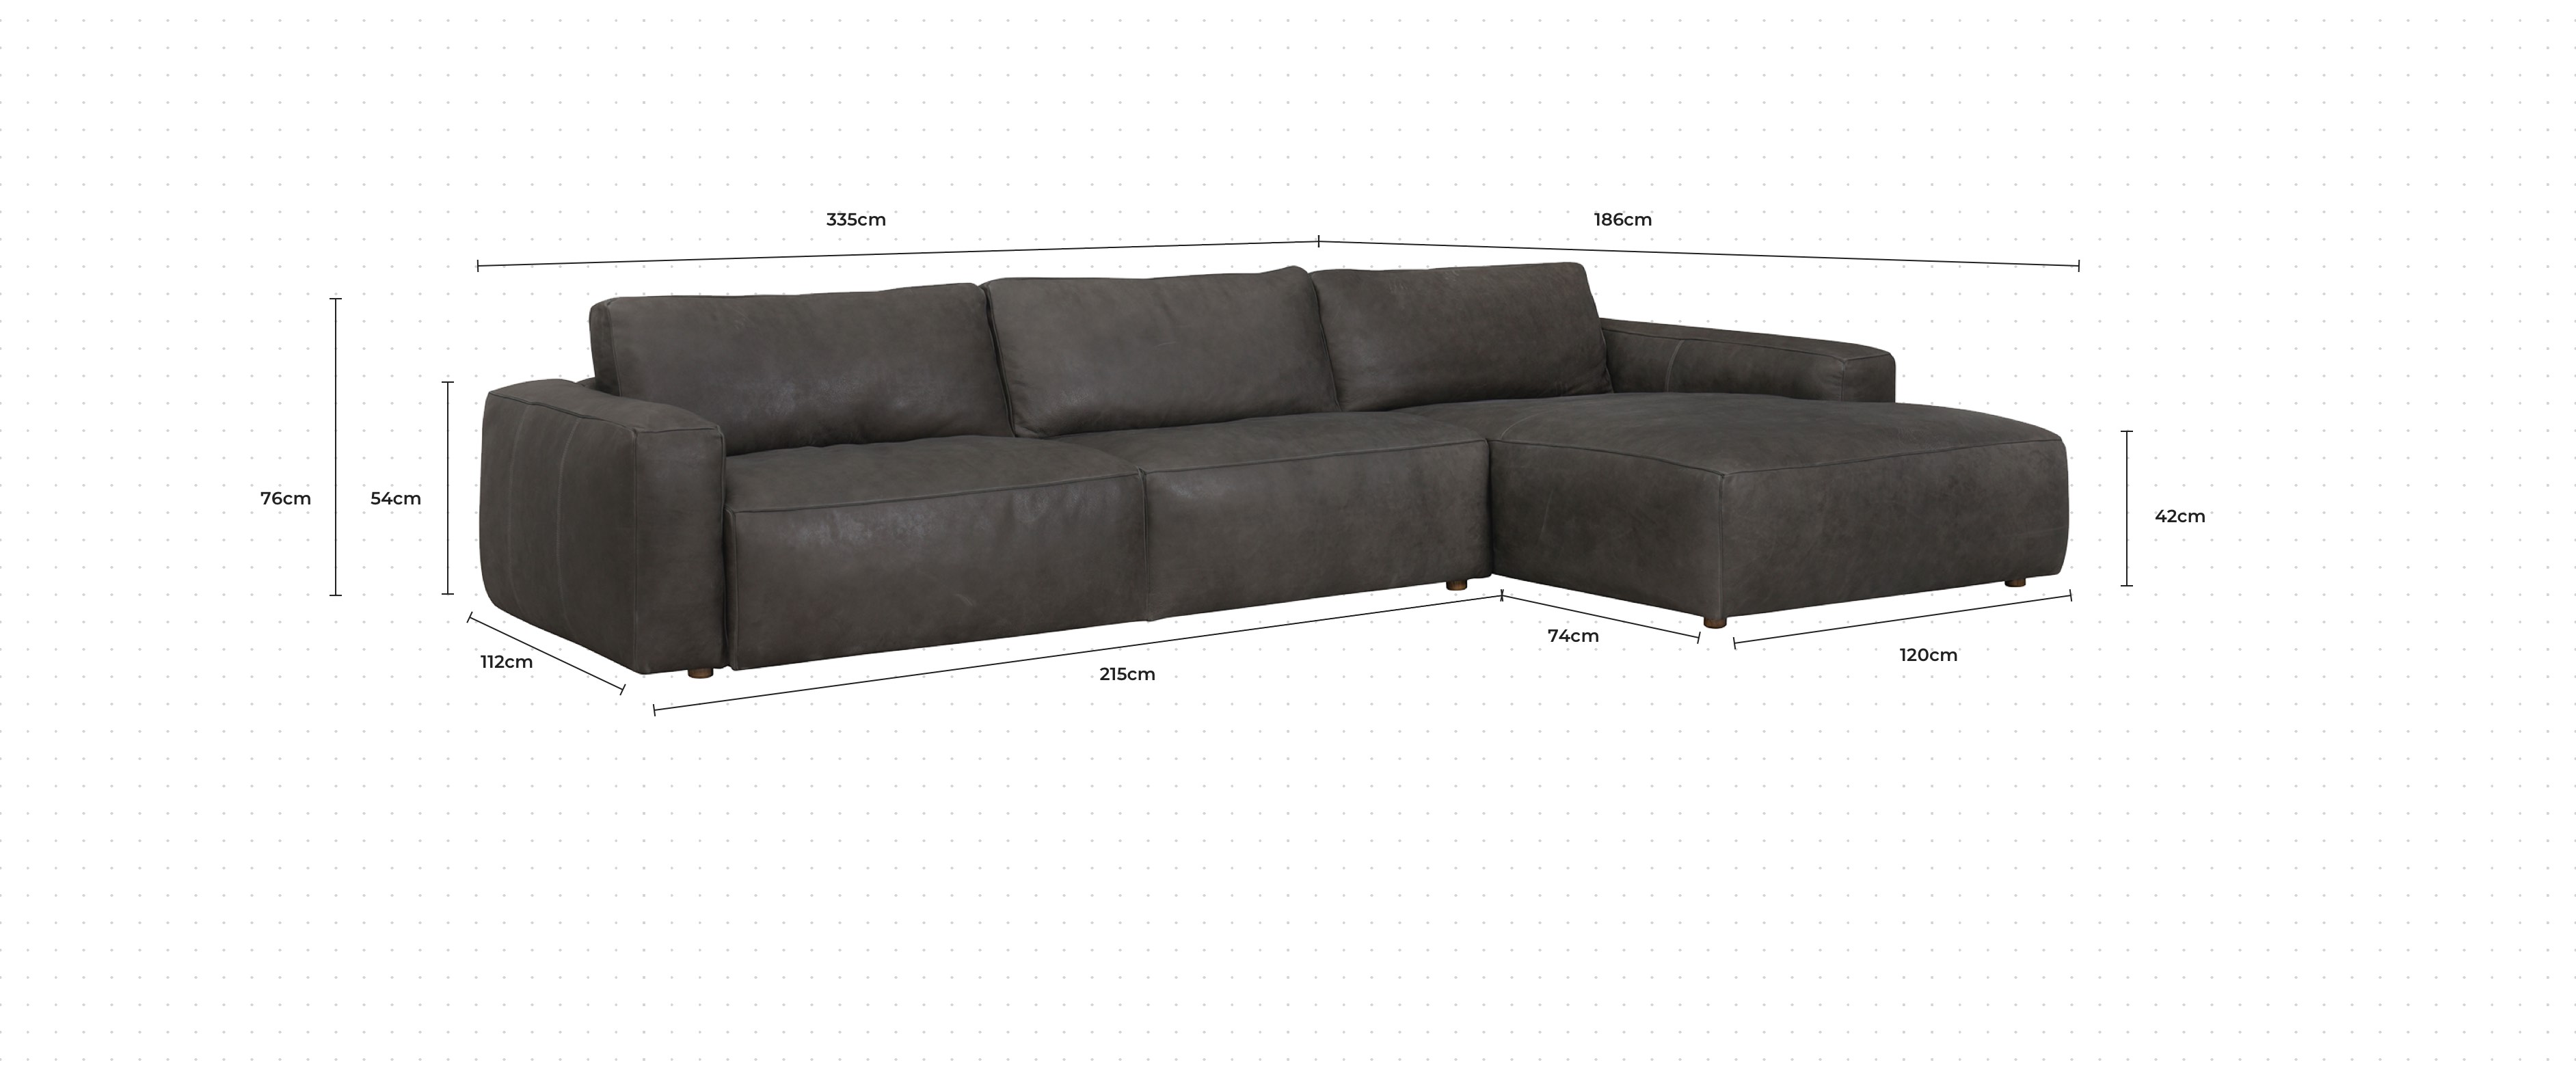 Truffle Large Chaise Sofa RHF dimensions